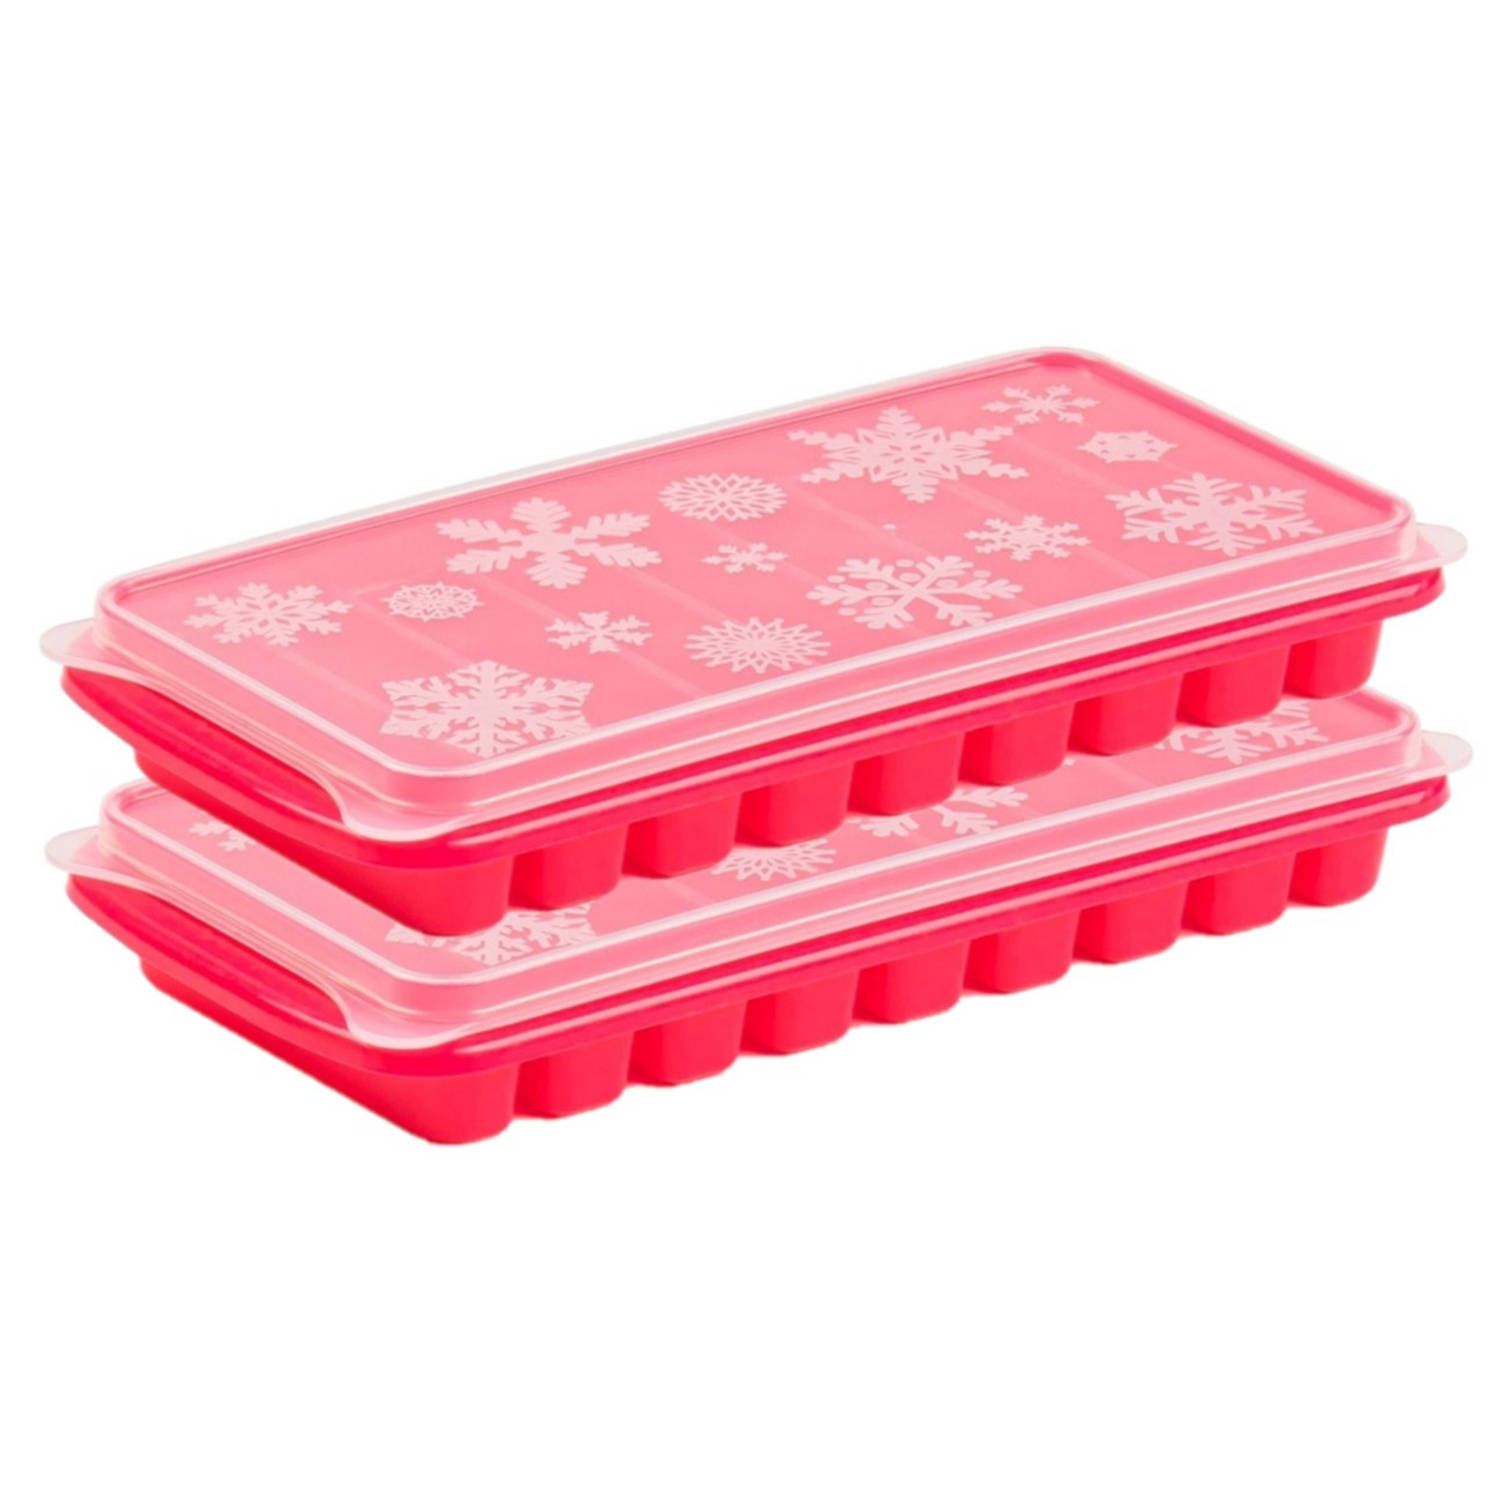 stuks Trays met Flessenhals ijsblokjes/ijsklontjes staafjes vormpjes 10 vakjes kunststof roze - IJsblokjesvormen | Blokker